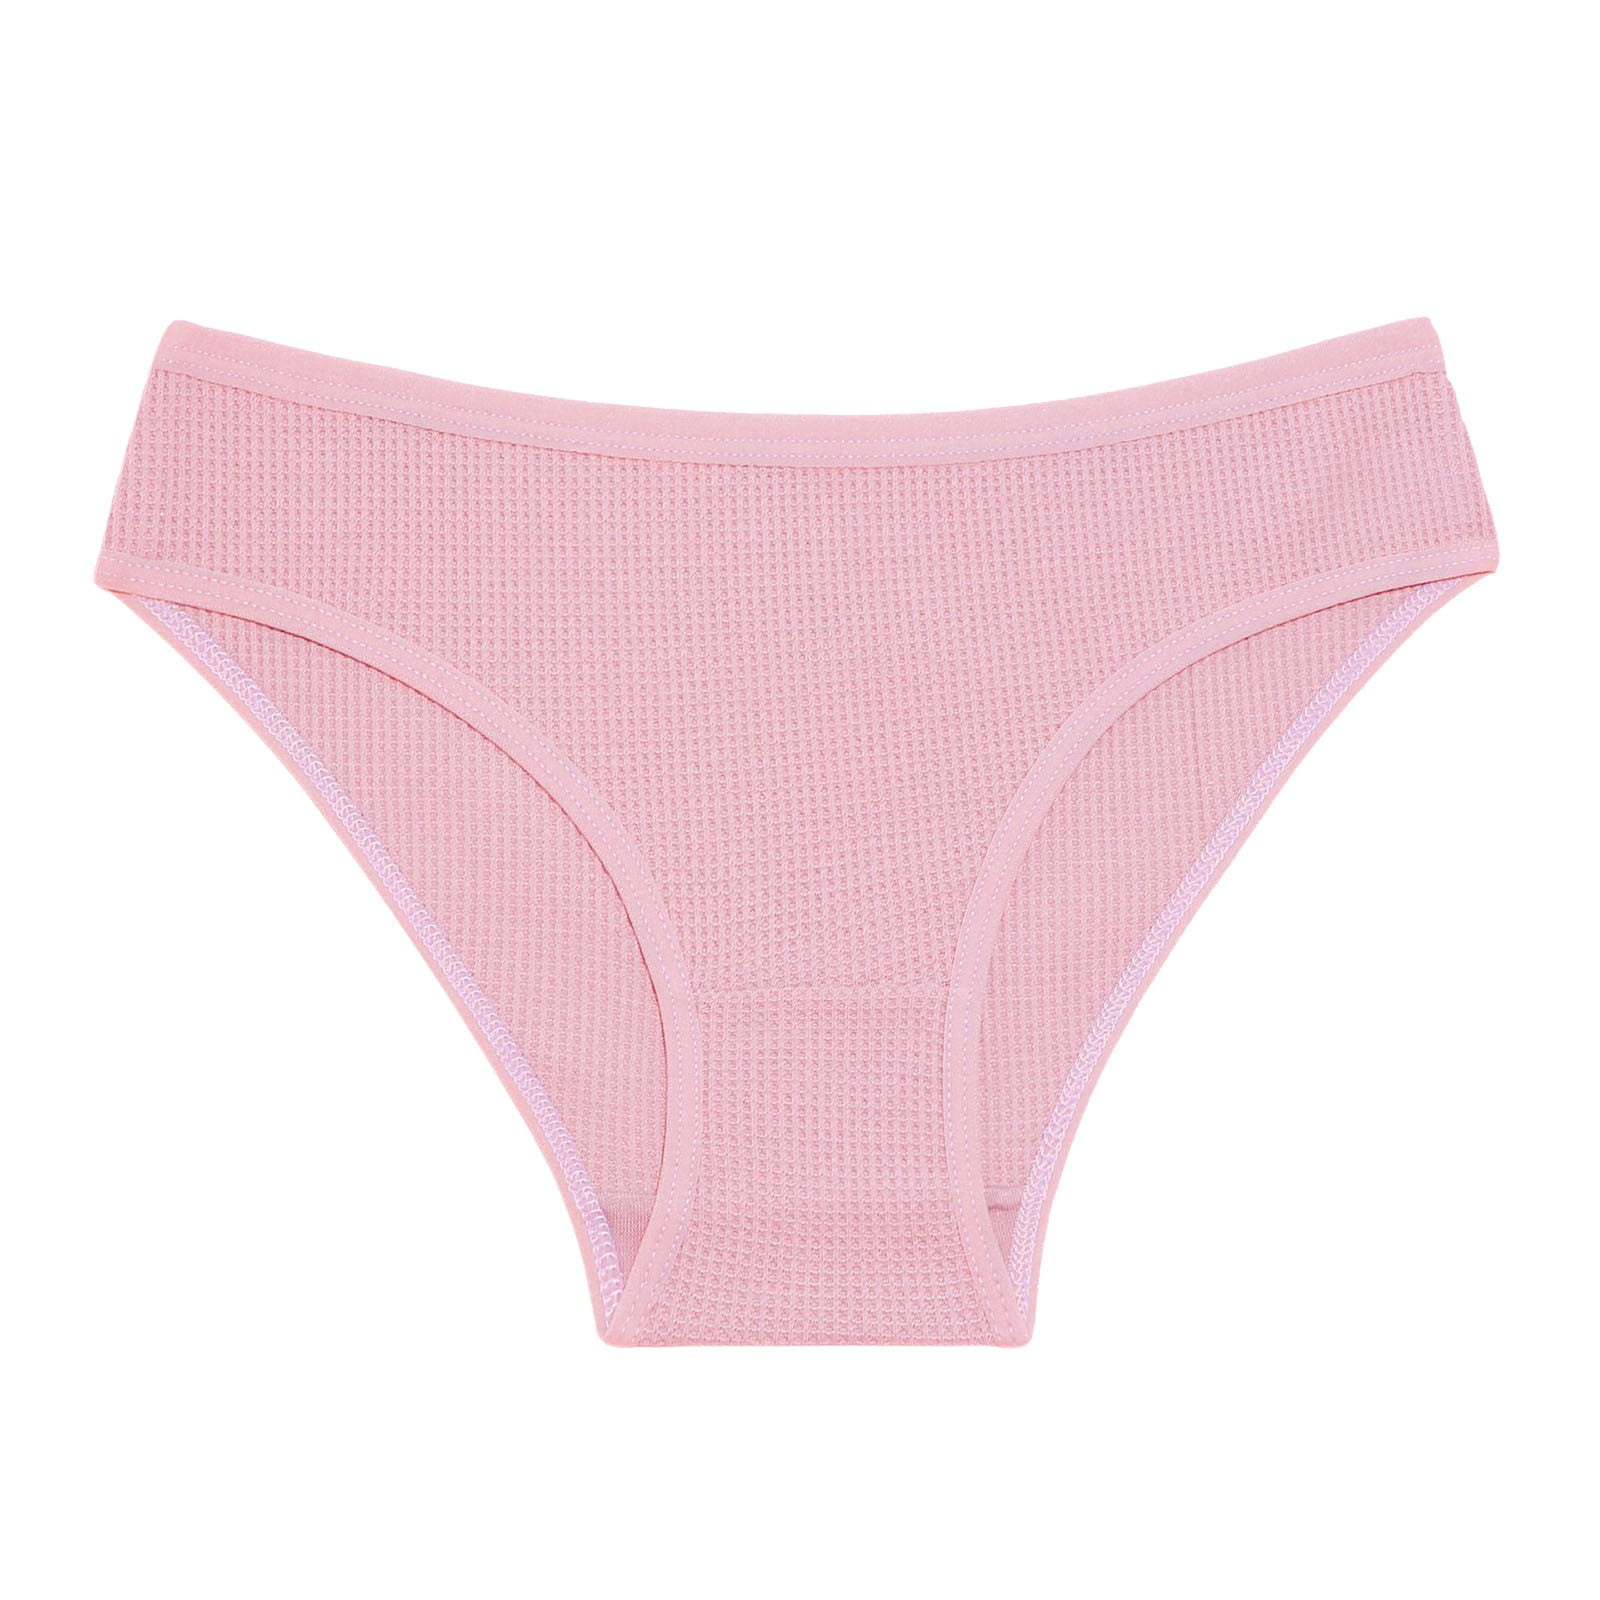 CAICJ98 Lingerie for Women Women Silk Panties Cotton Crotch Mid